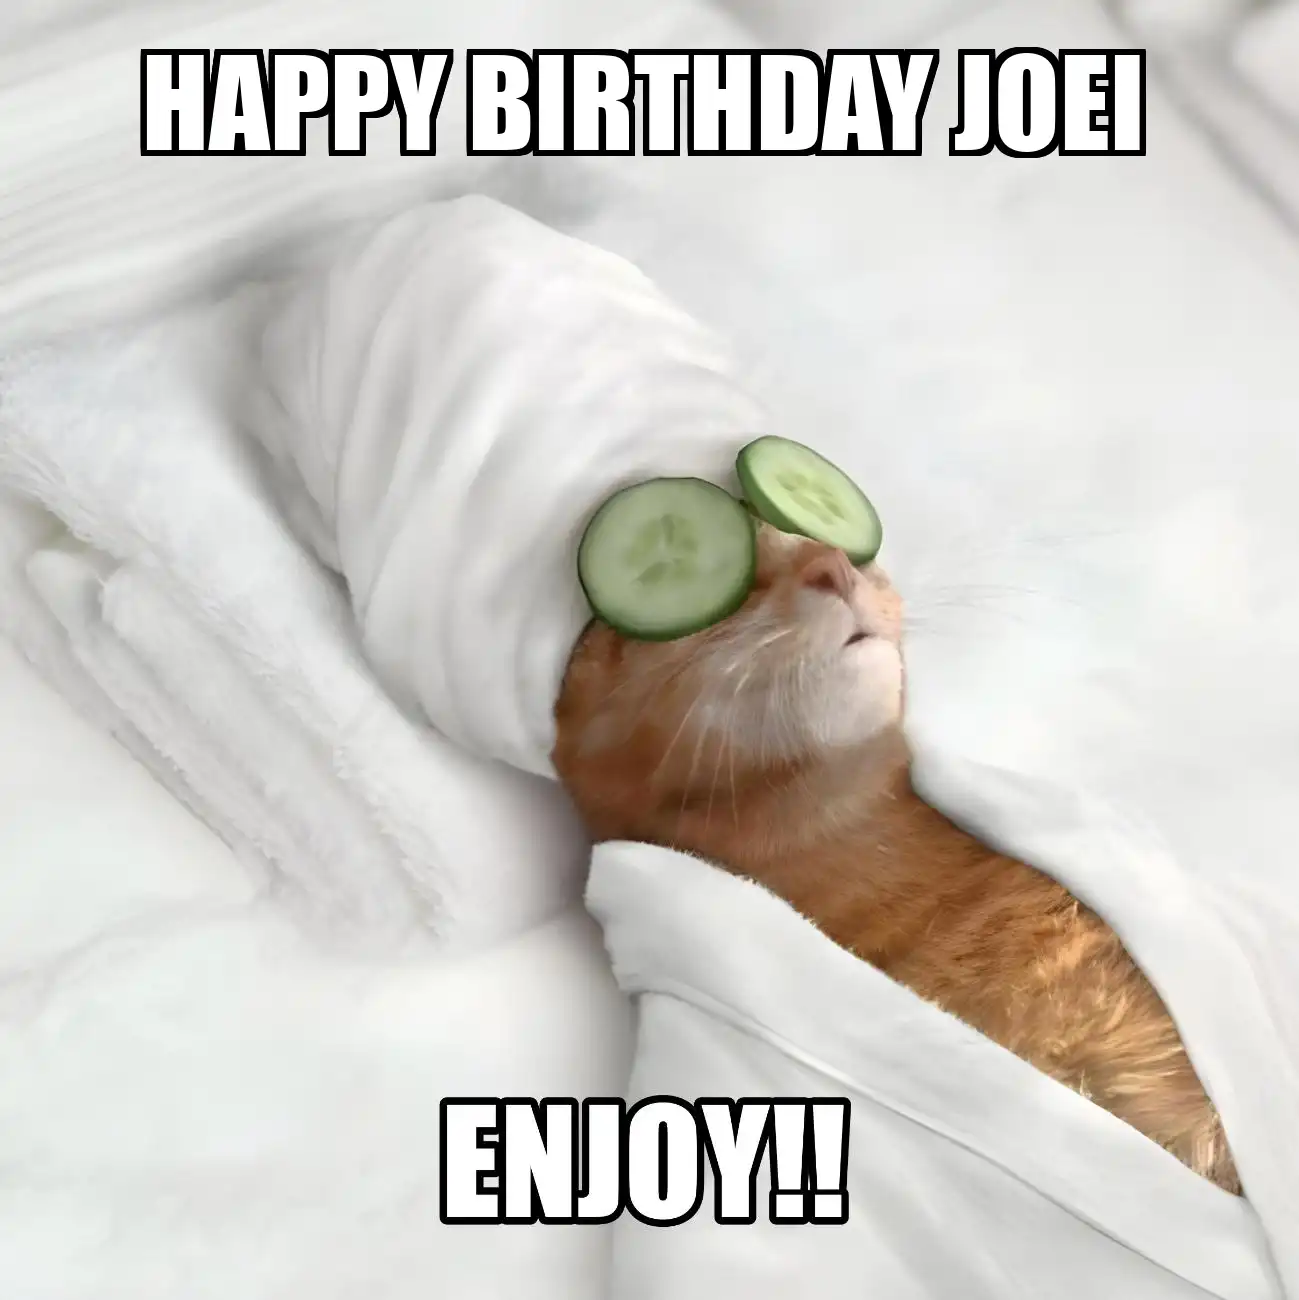 Happy Birthday Joei Enjoy Cat Meme